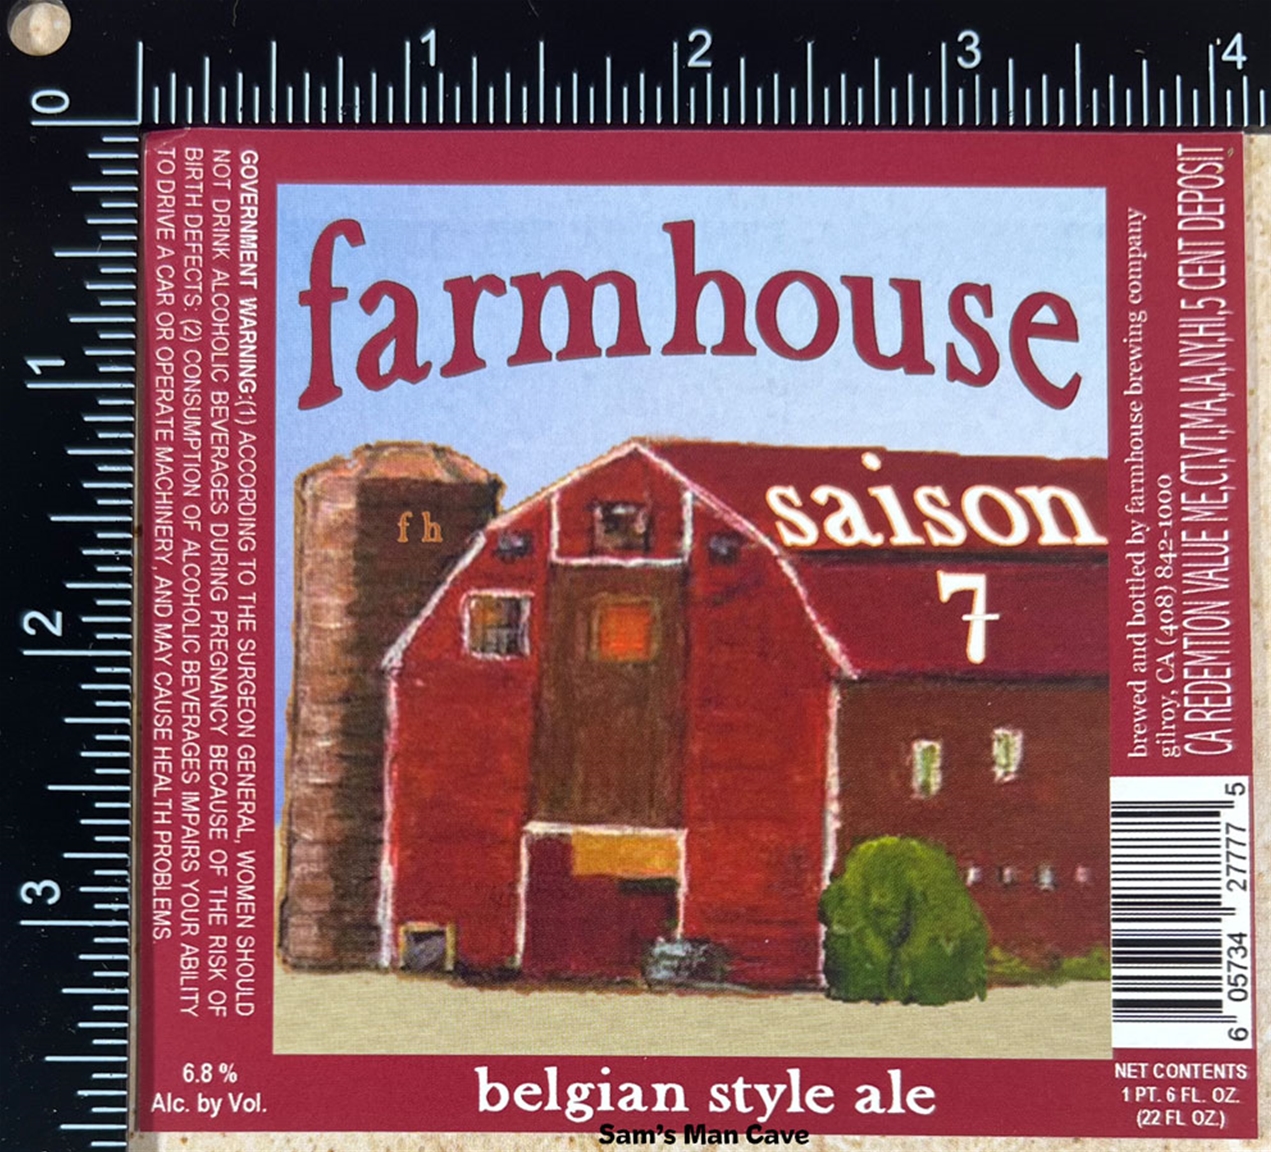 Farmhouse Saison 7 Label